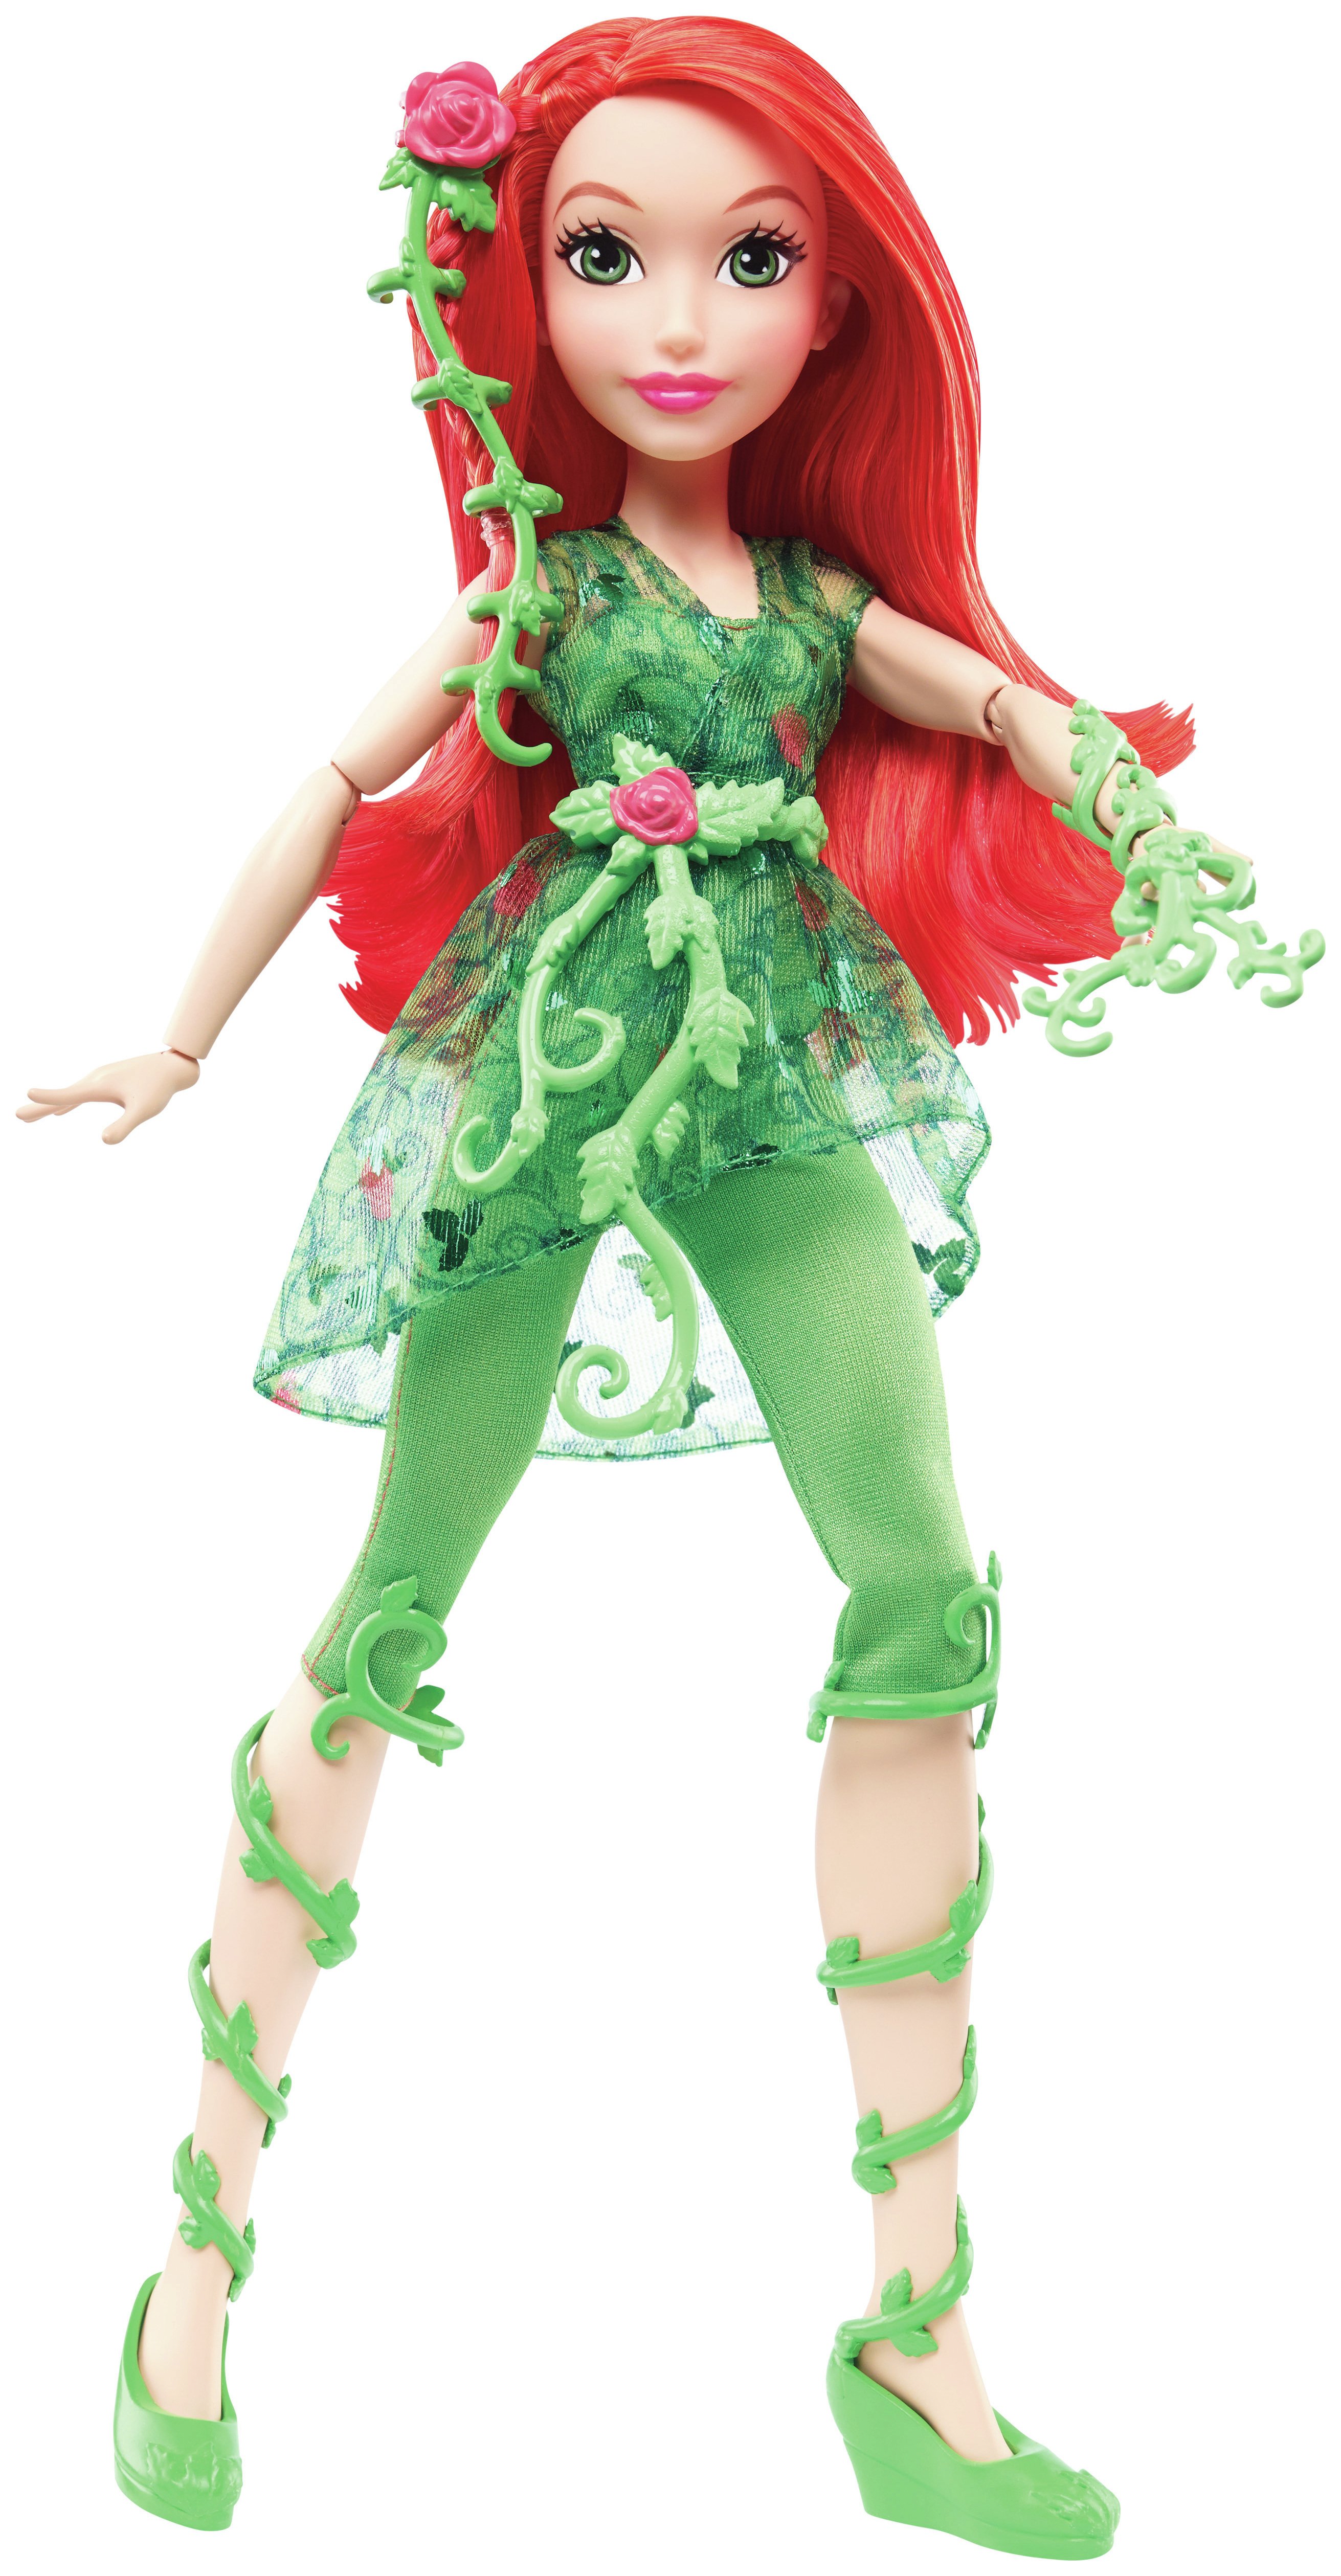 Super doll. Пойзон Айви кукла. Кукла Mattel DC Superhero girls Poison Ivy, 30 см, dlt67. Пойзон Айви кукла Mattel. Пойзон Айви DC super Hero.